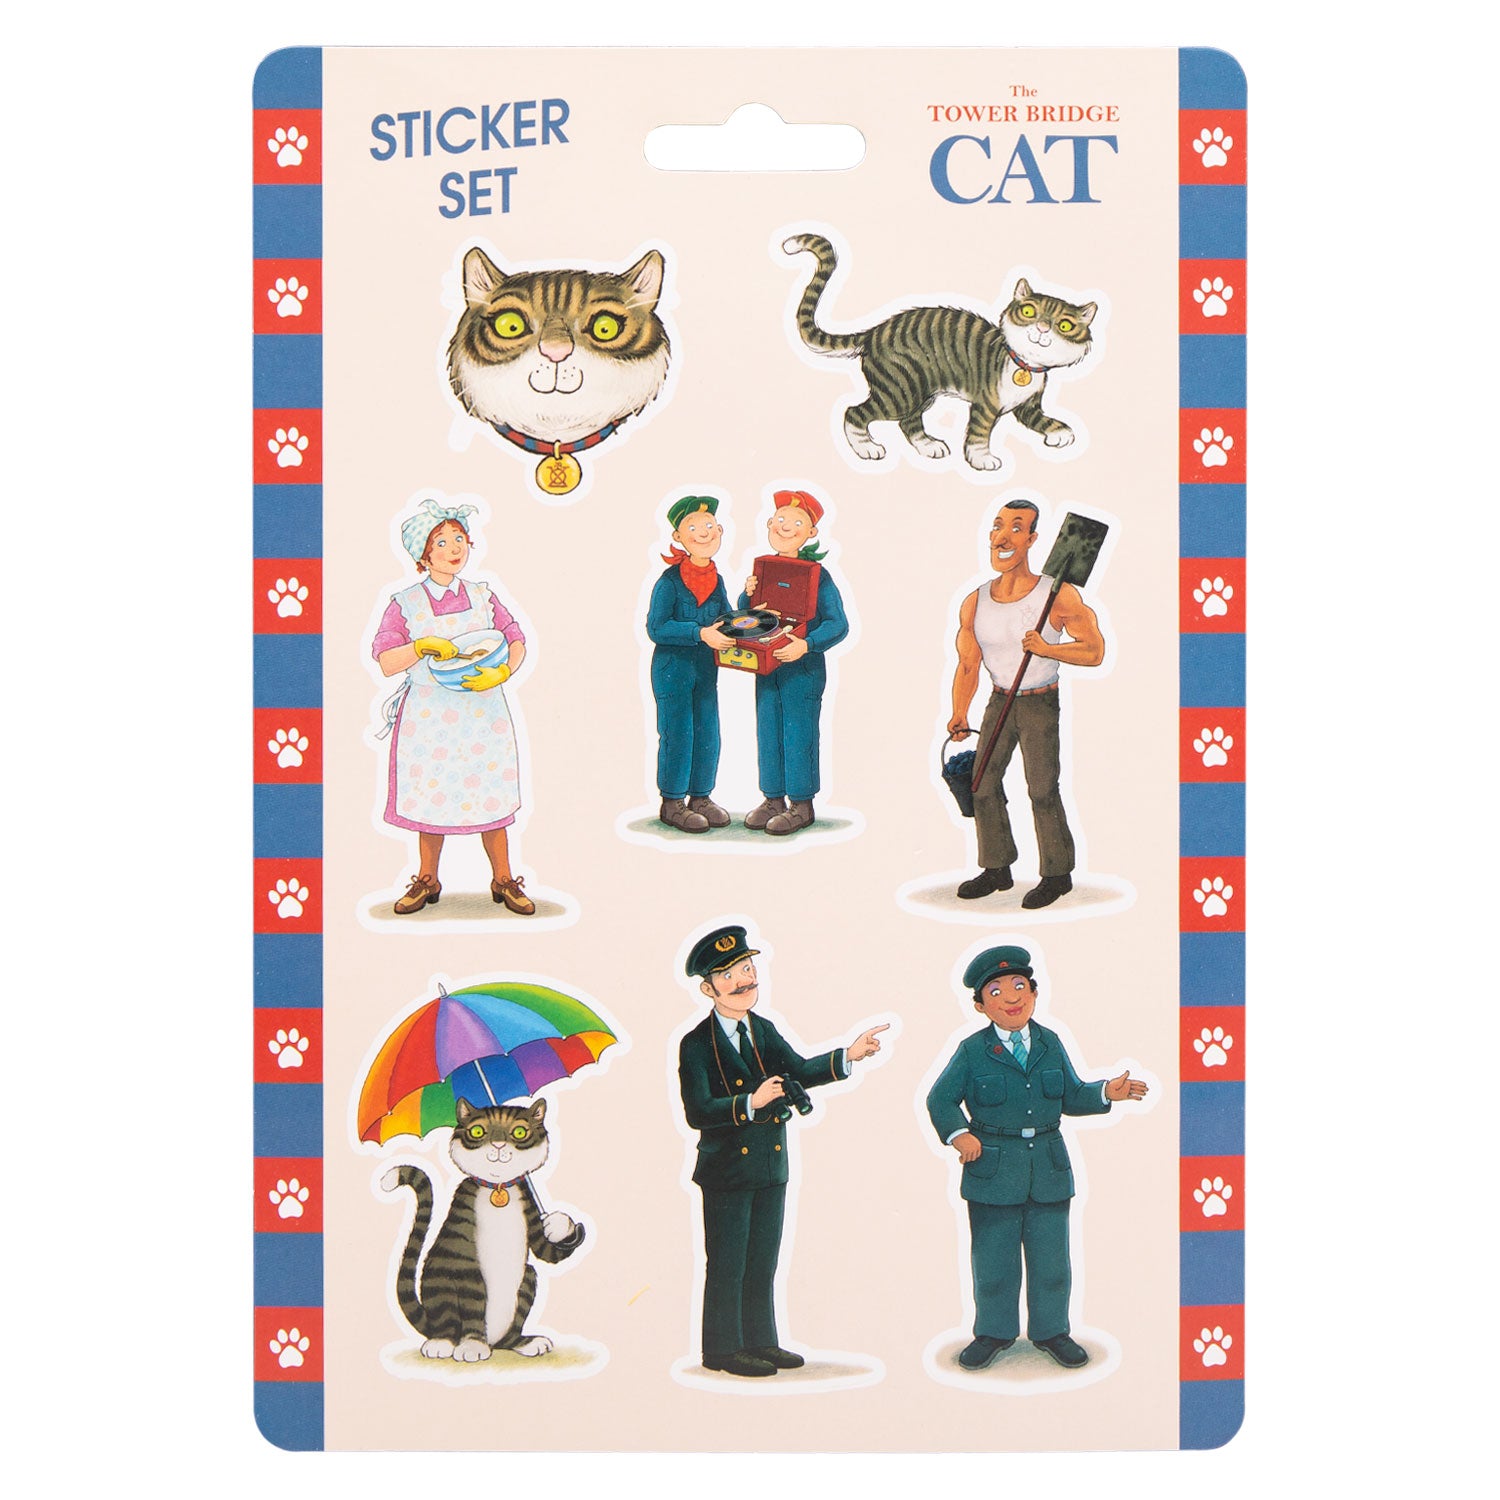 The Tower Bridge Cat Sticker Set